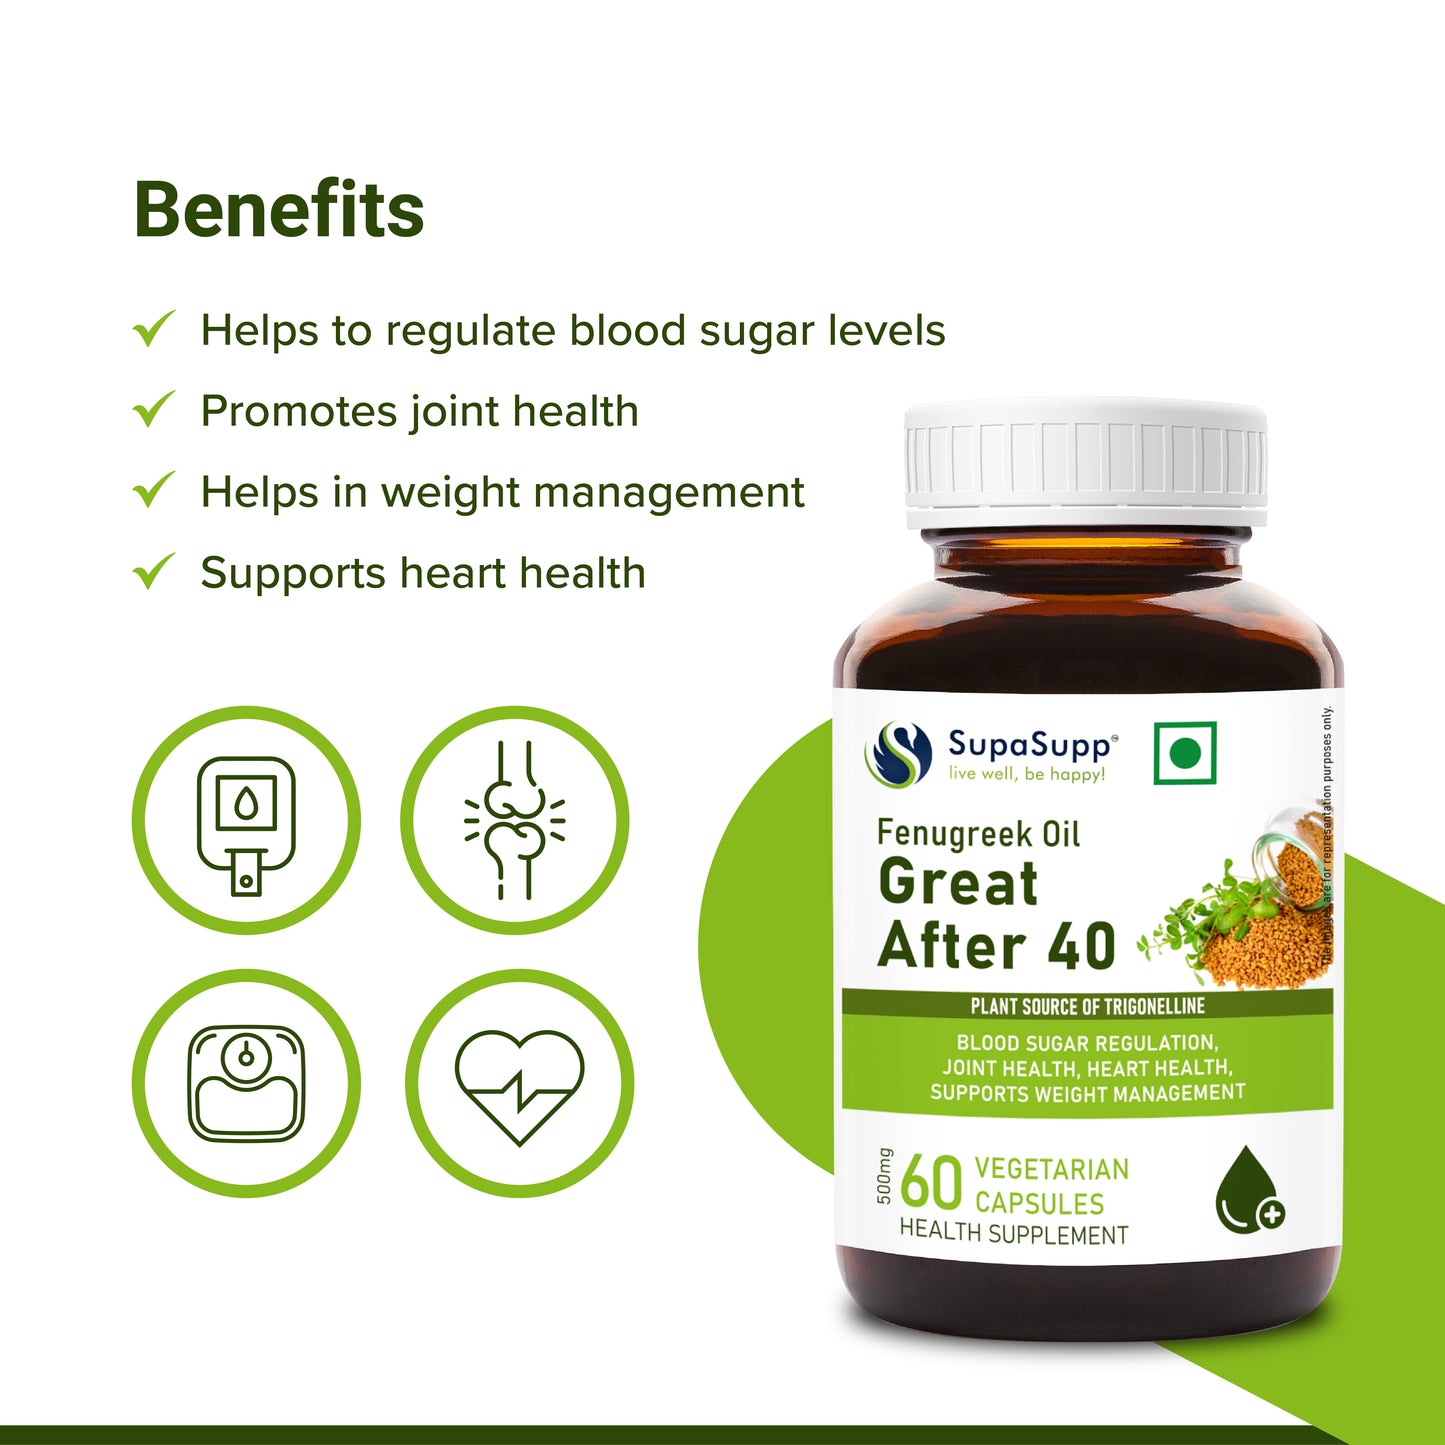 SupaSupp Fenugreek Oil Great After 40 | Blood Sugar Regulation, Joint Health, Heart Health, Supports Weight Management | Health Supplement | 60 Veg Cap, 500 mg